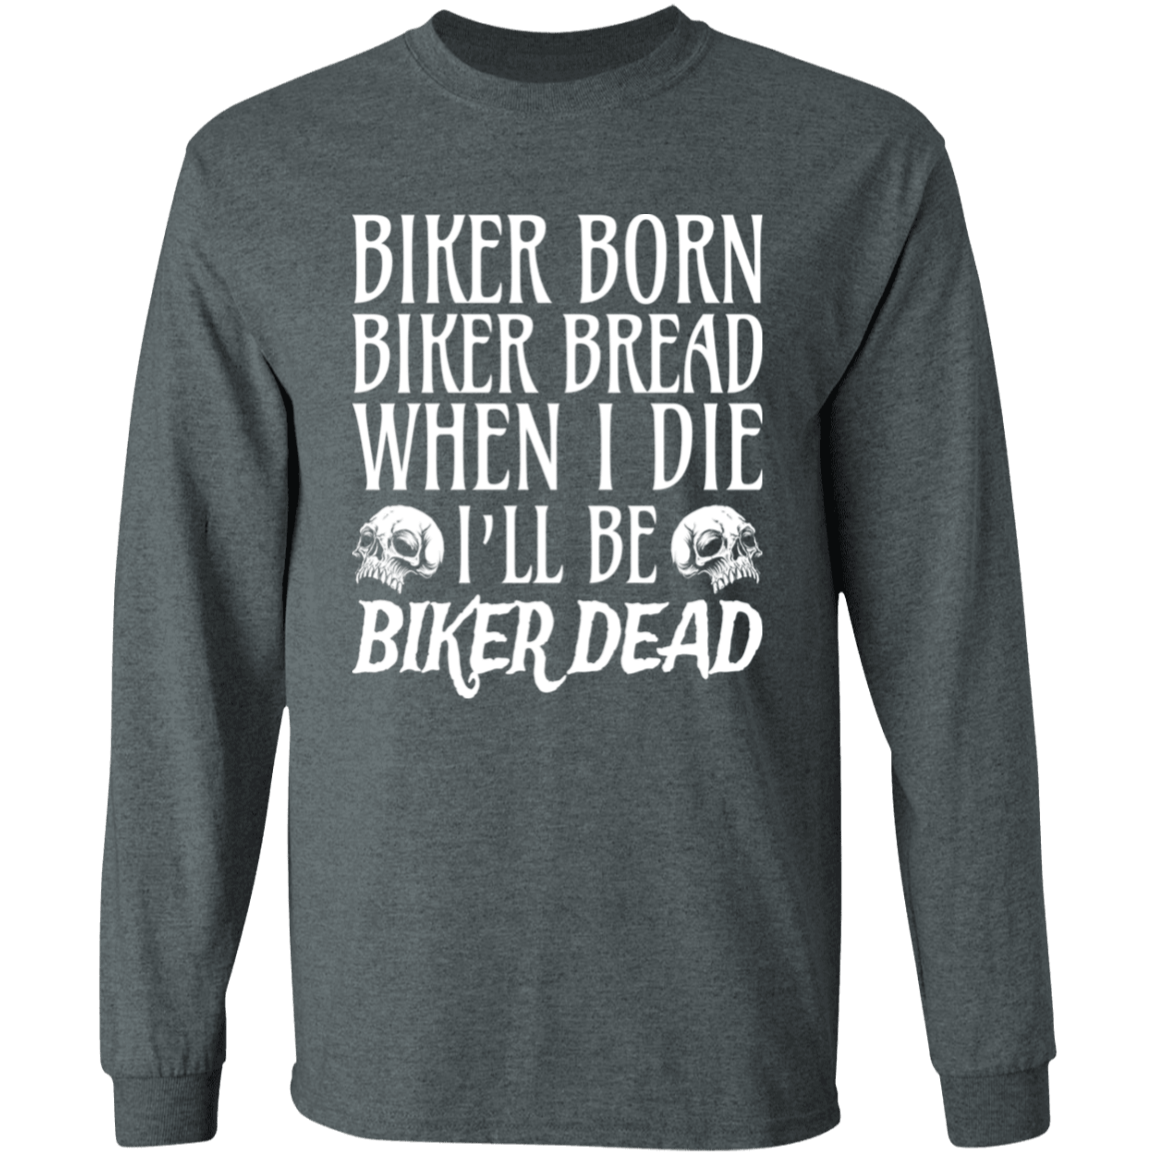 Apparel - Biker Born, Biker Bred Shirt